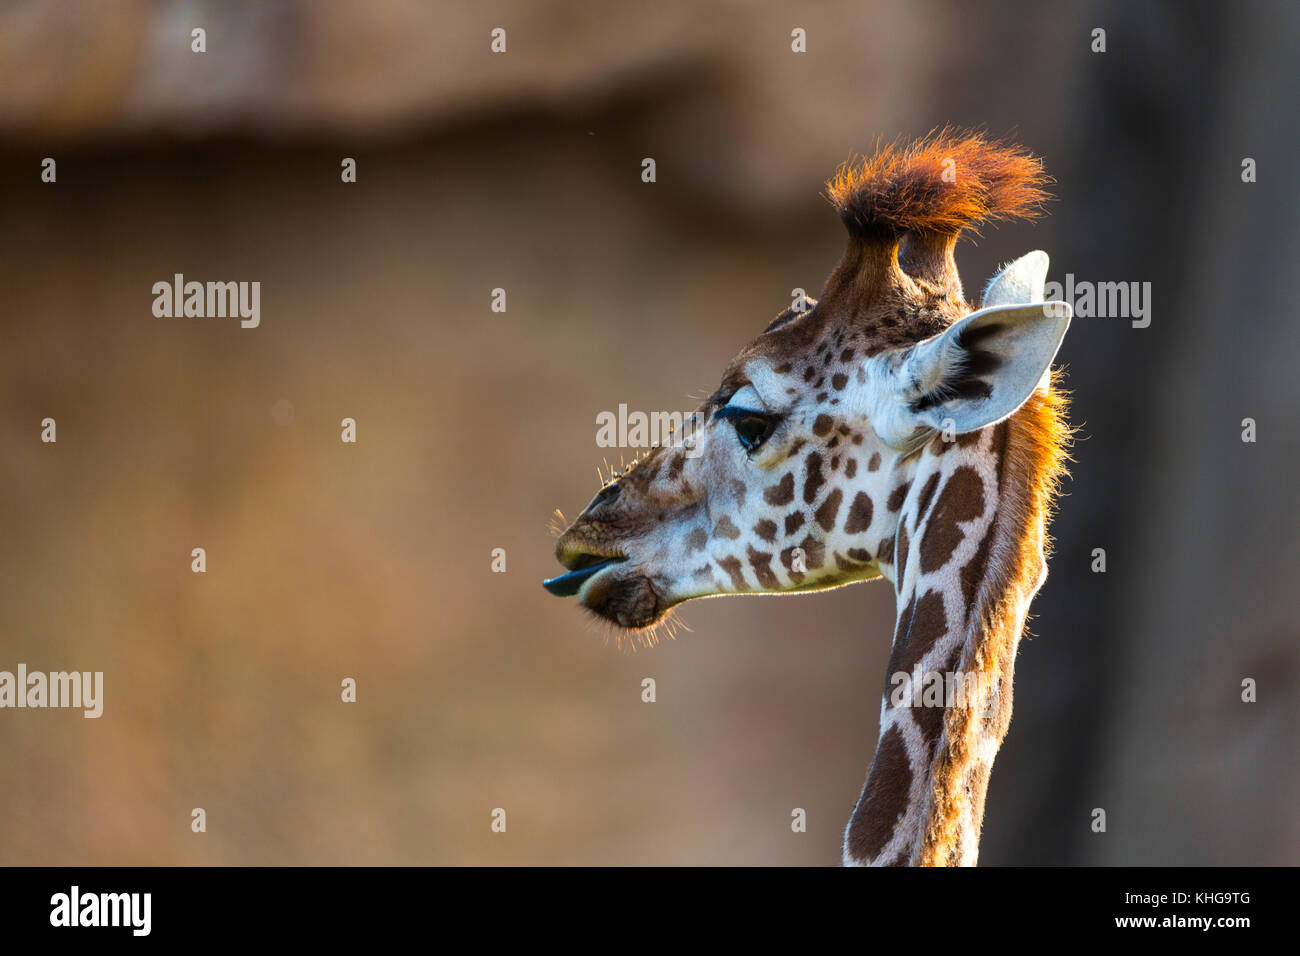 Rothschild's giraffe (Giraffa camelopardalis rothschildi)b Stock Photo